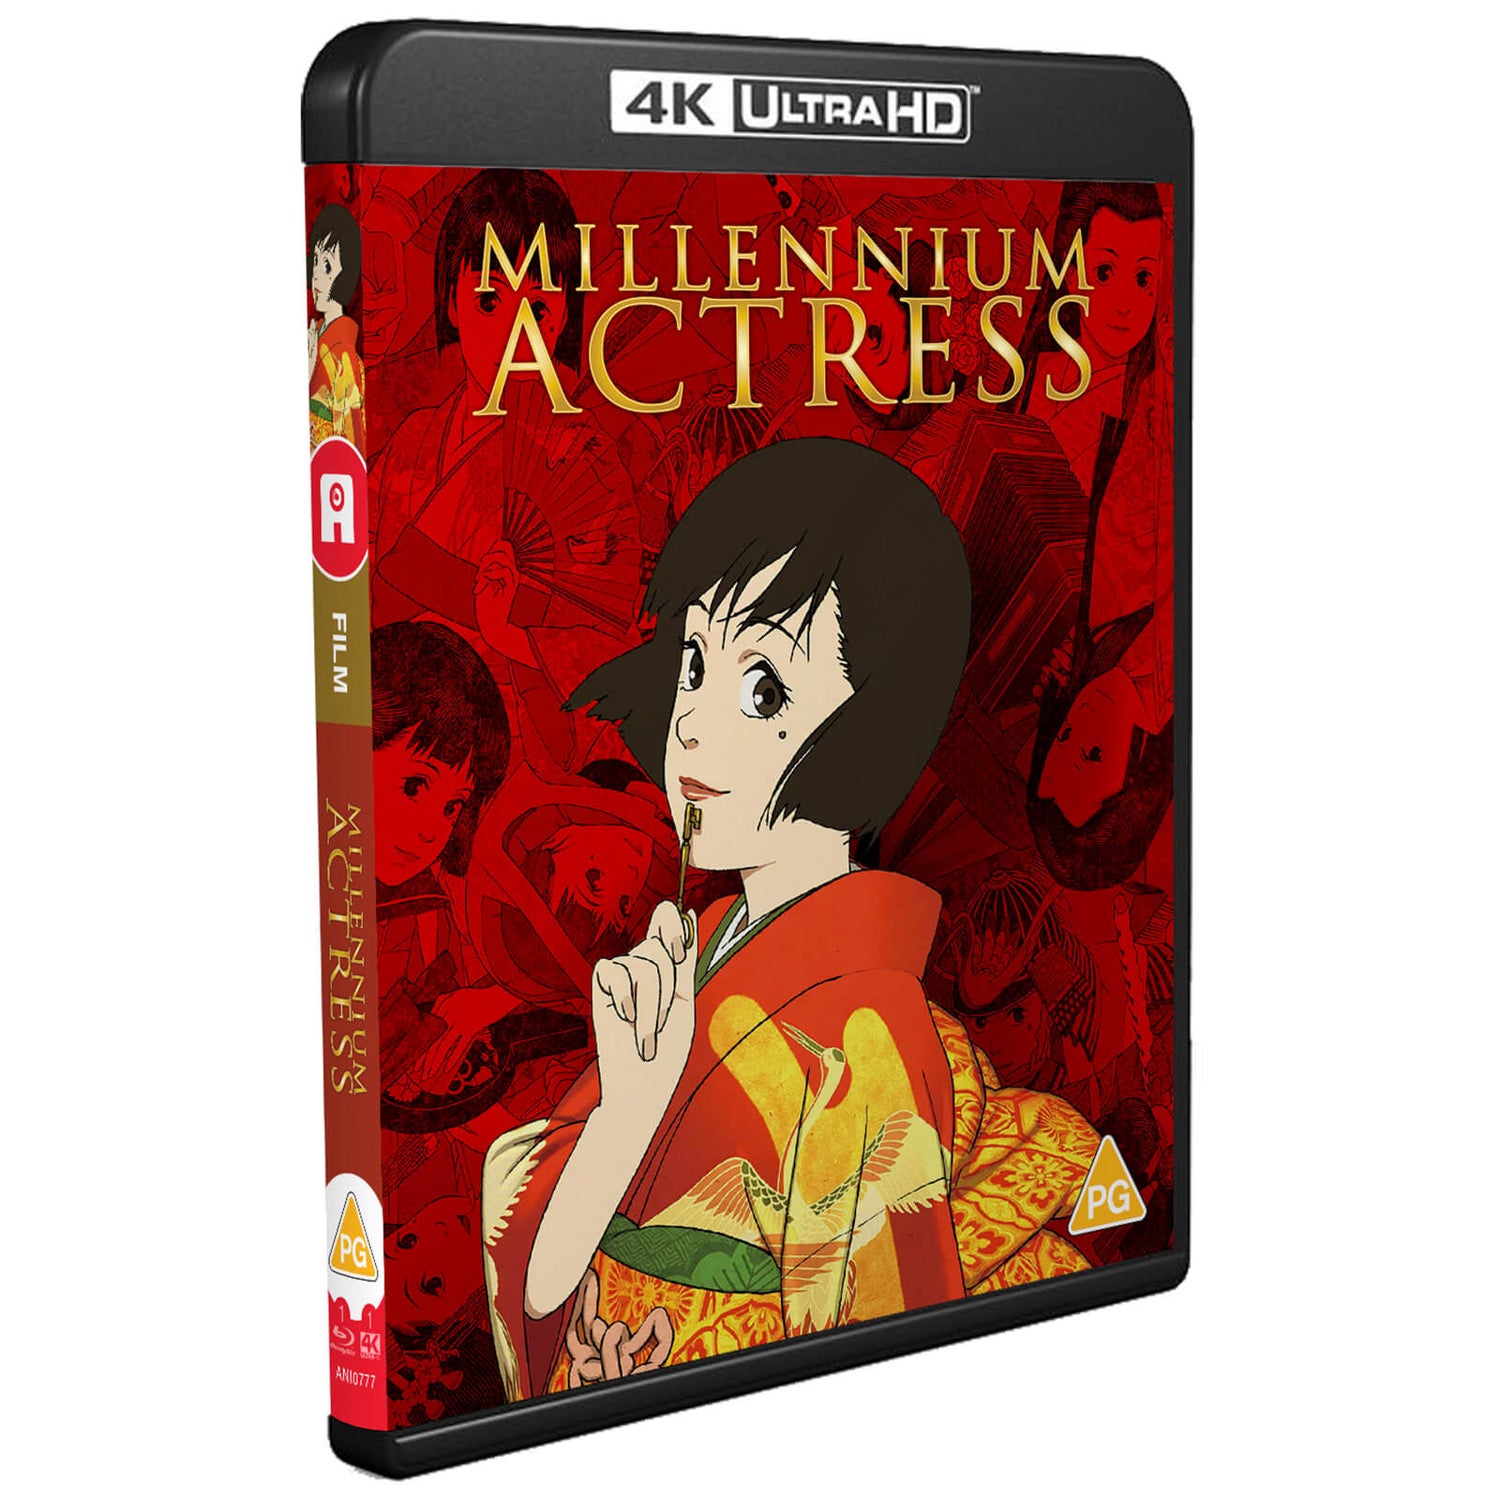 Millennium Actress 4K Ultra HD (Includes Blu-Ray)